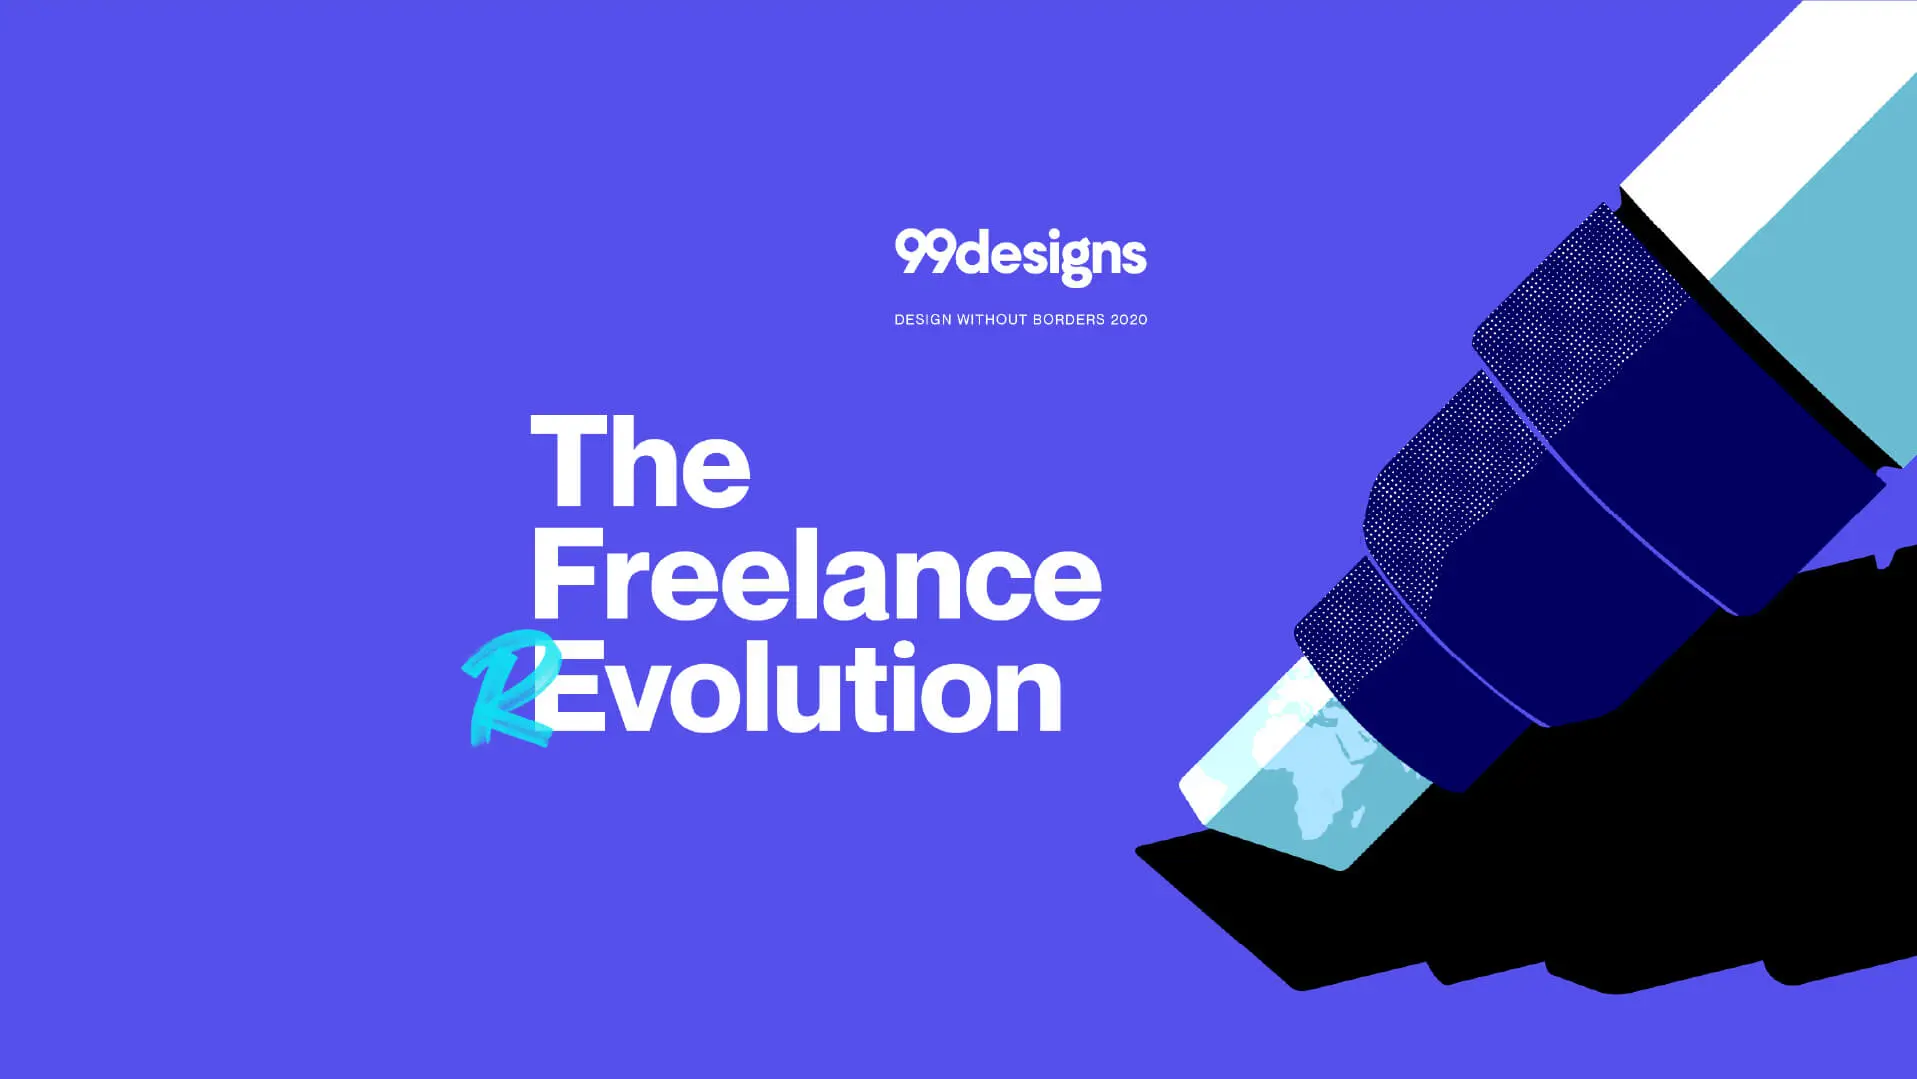 99designs - The freelance revolution report